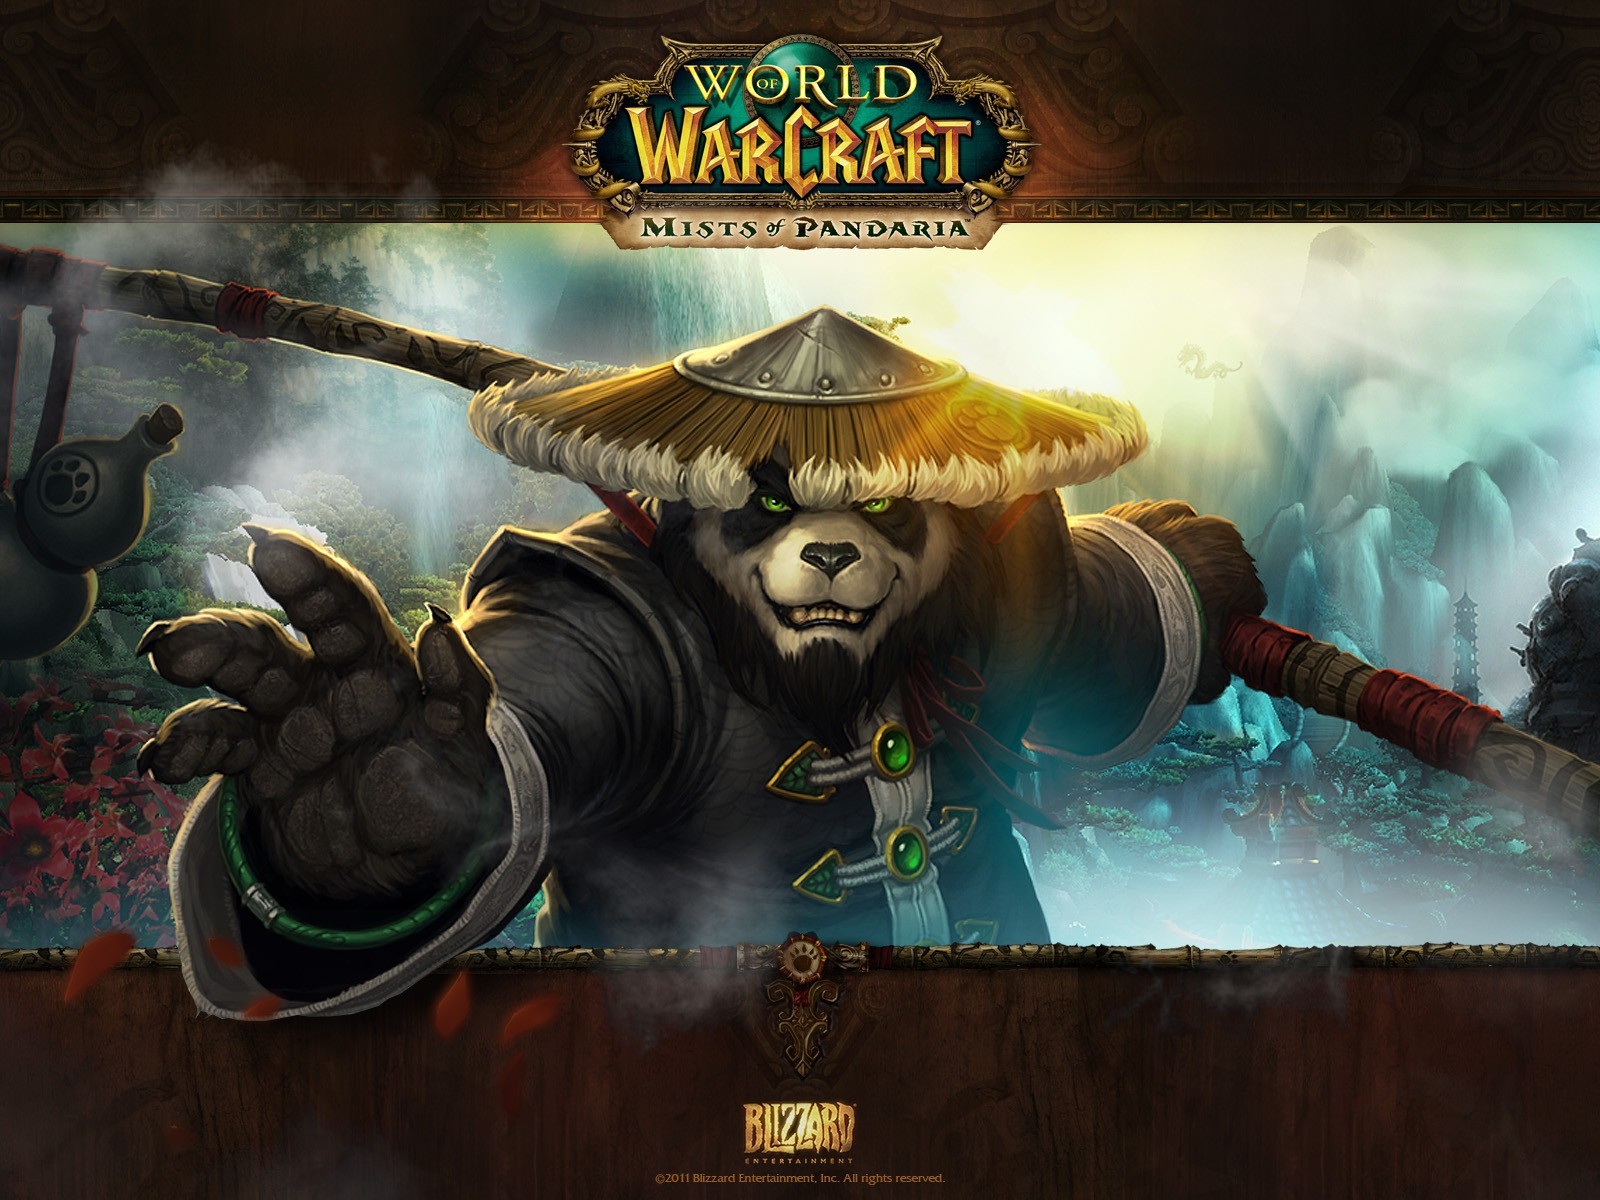 World-of-Warcraft-Player-Close-to-Level-100-on-Factionless-Pandaren-474603-2.jpg